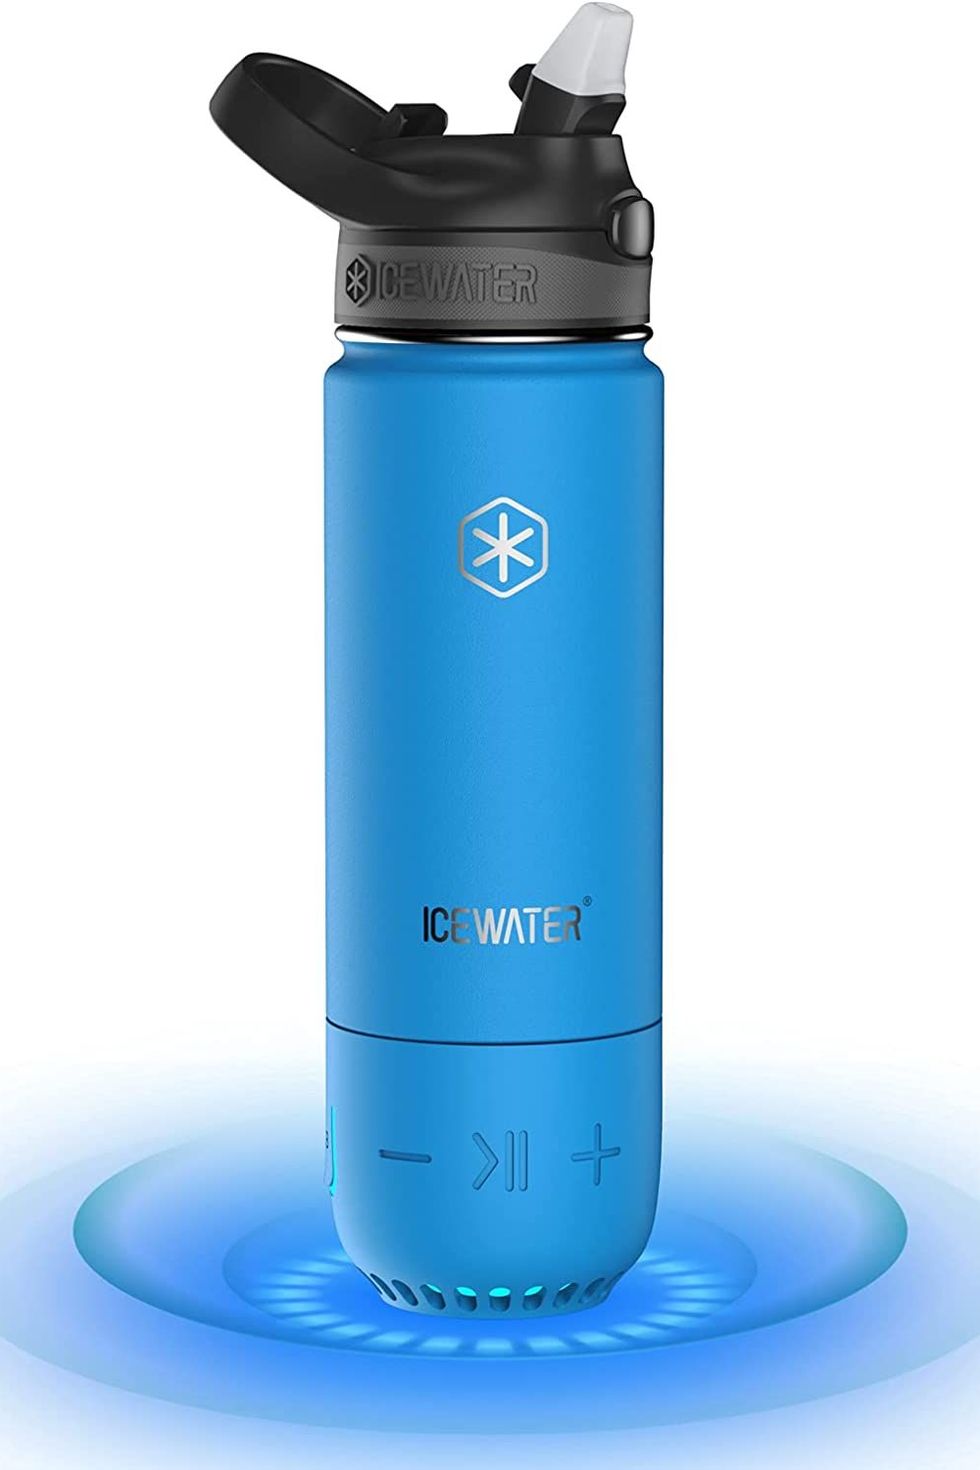 https://hips.hearstapps.com/vader-prod.s3.amazonaws.com/1641235530-best-smart-water-bottles-icewater-3-in-1-smart-water-bottle-1641235508.jpg?crop=0.7077140835102619xw:1xh;center,top&resize=980:*